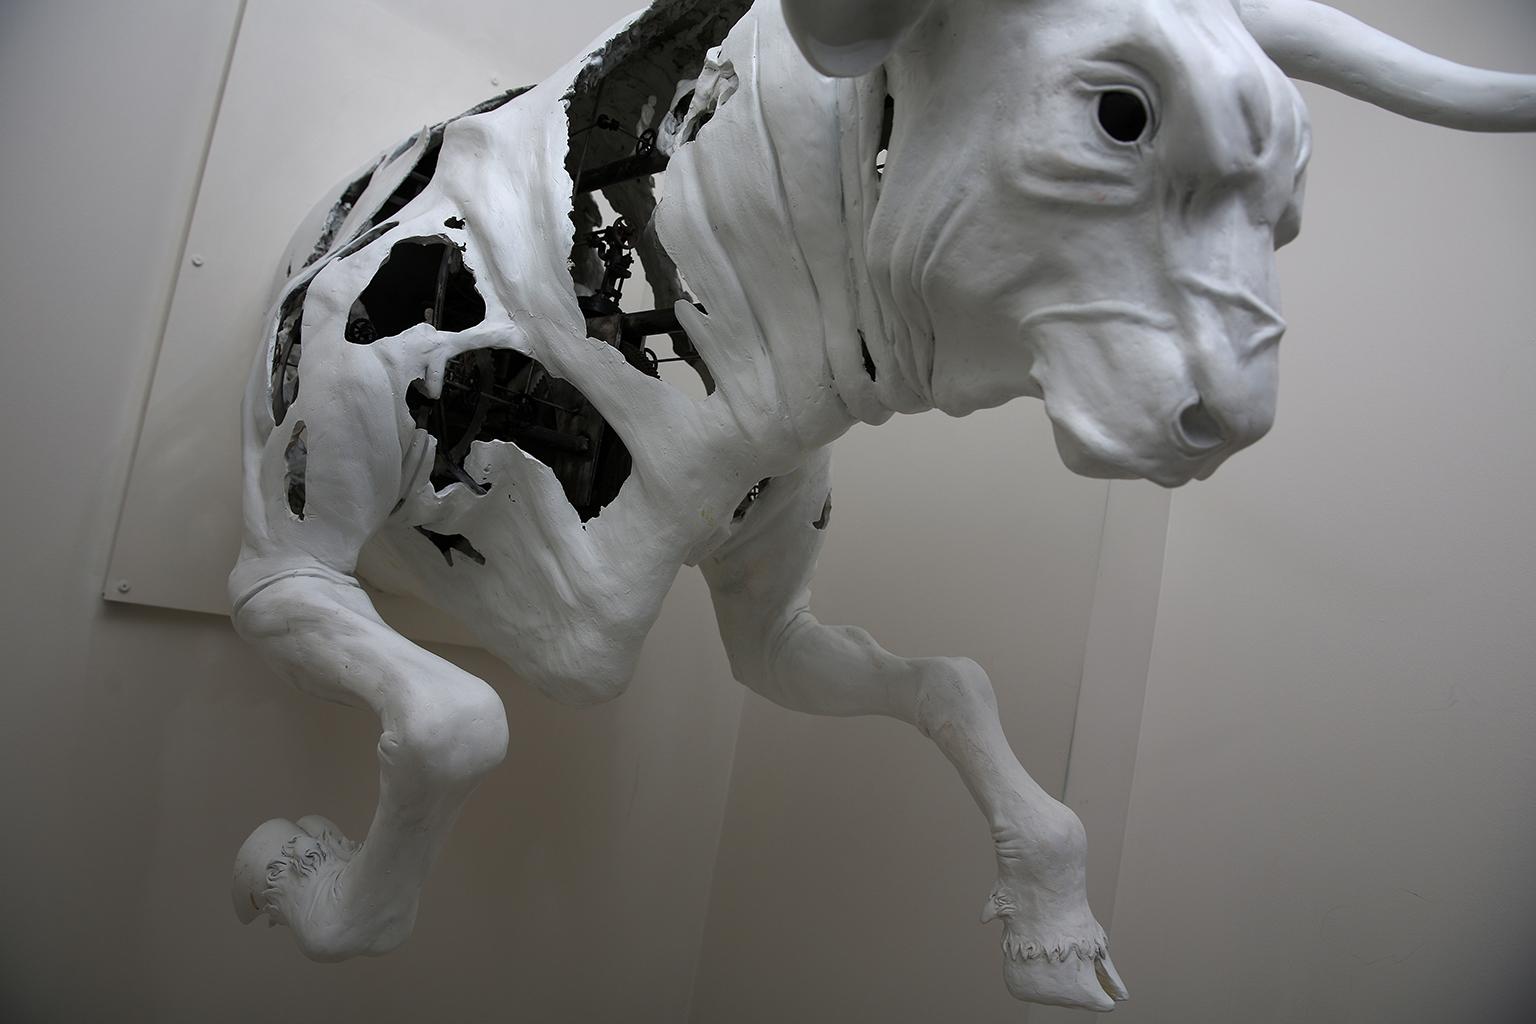 The Bull by Hobbes Vincent. White plaster and steel sculpture. Bull Bear Market 11